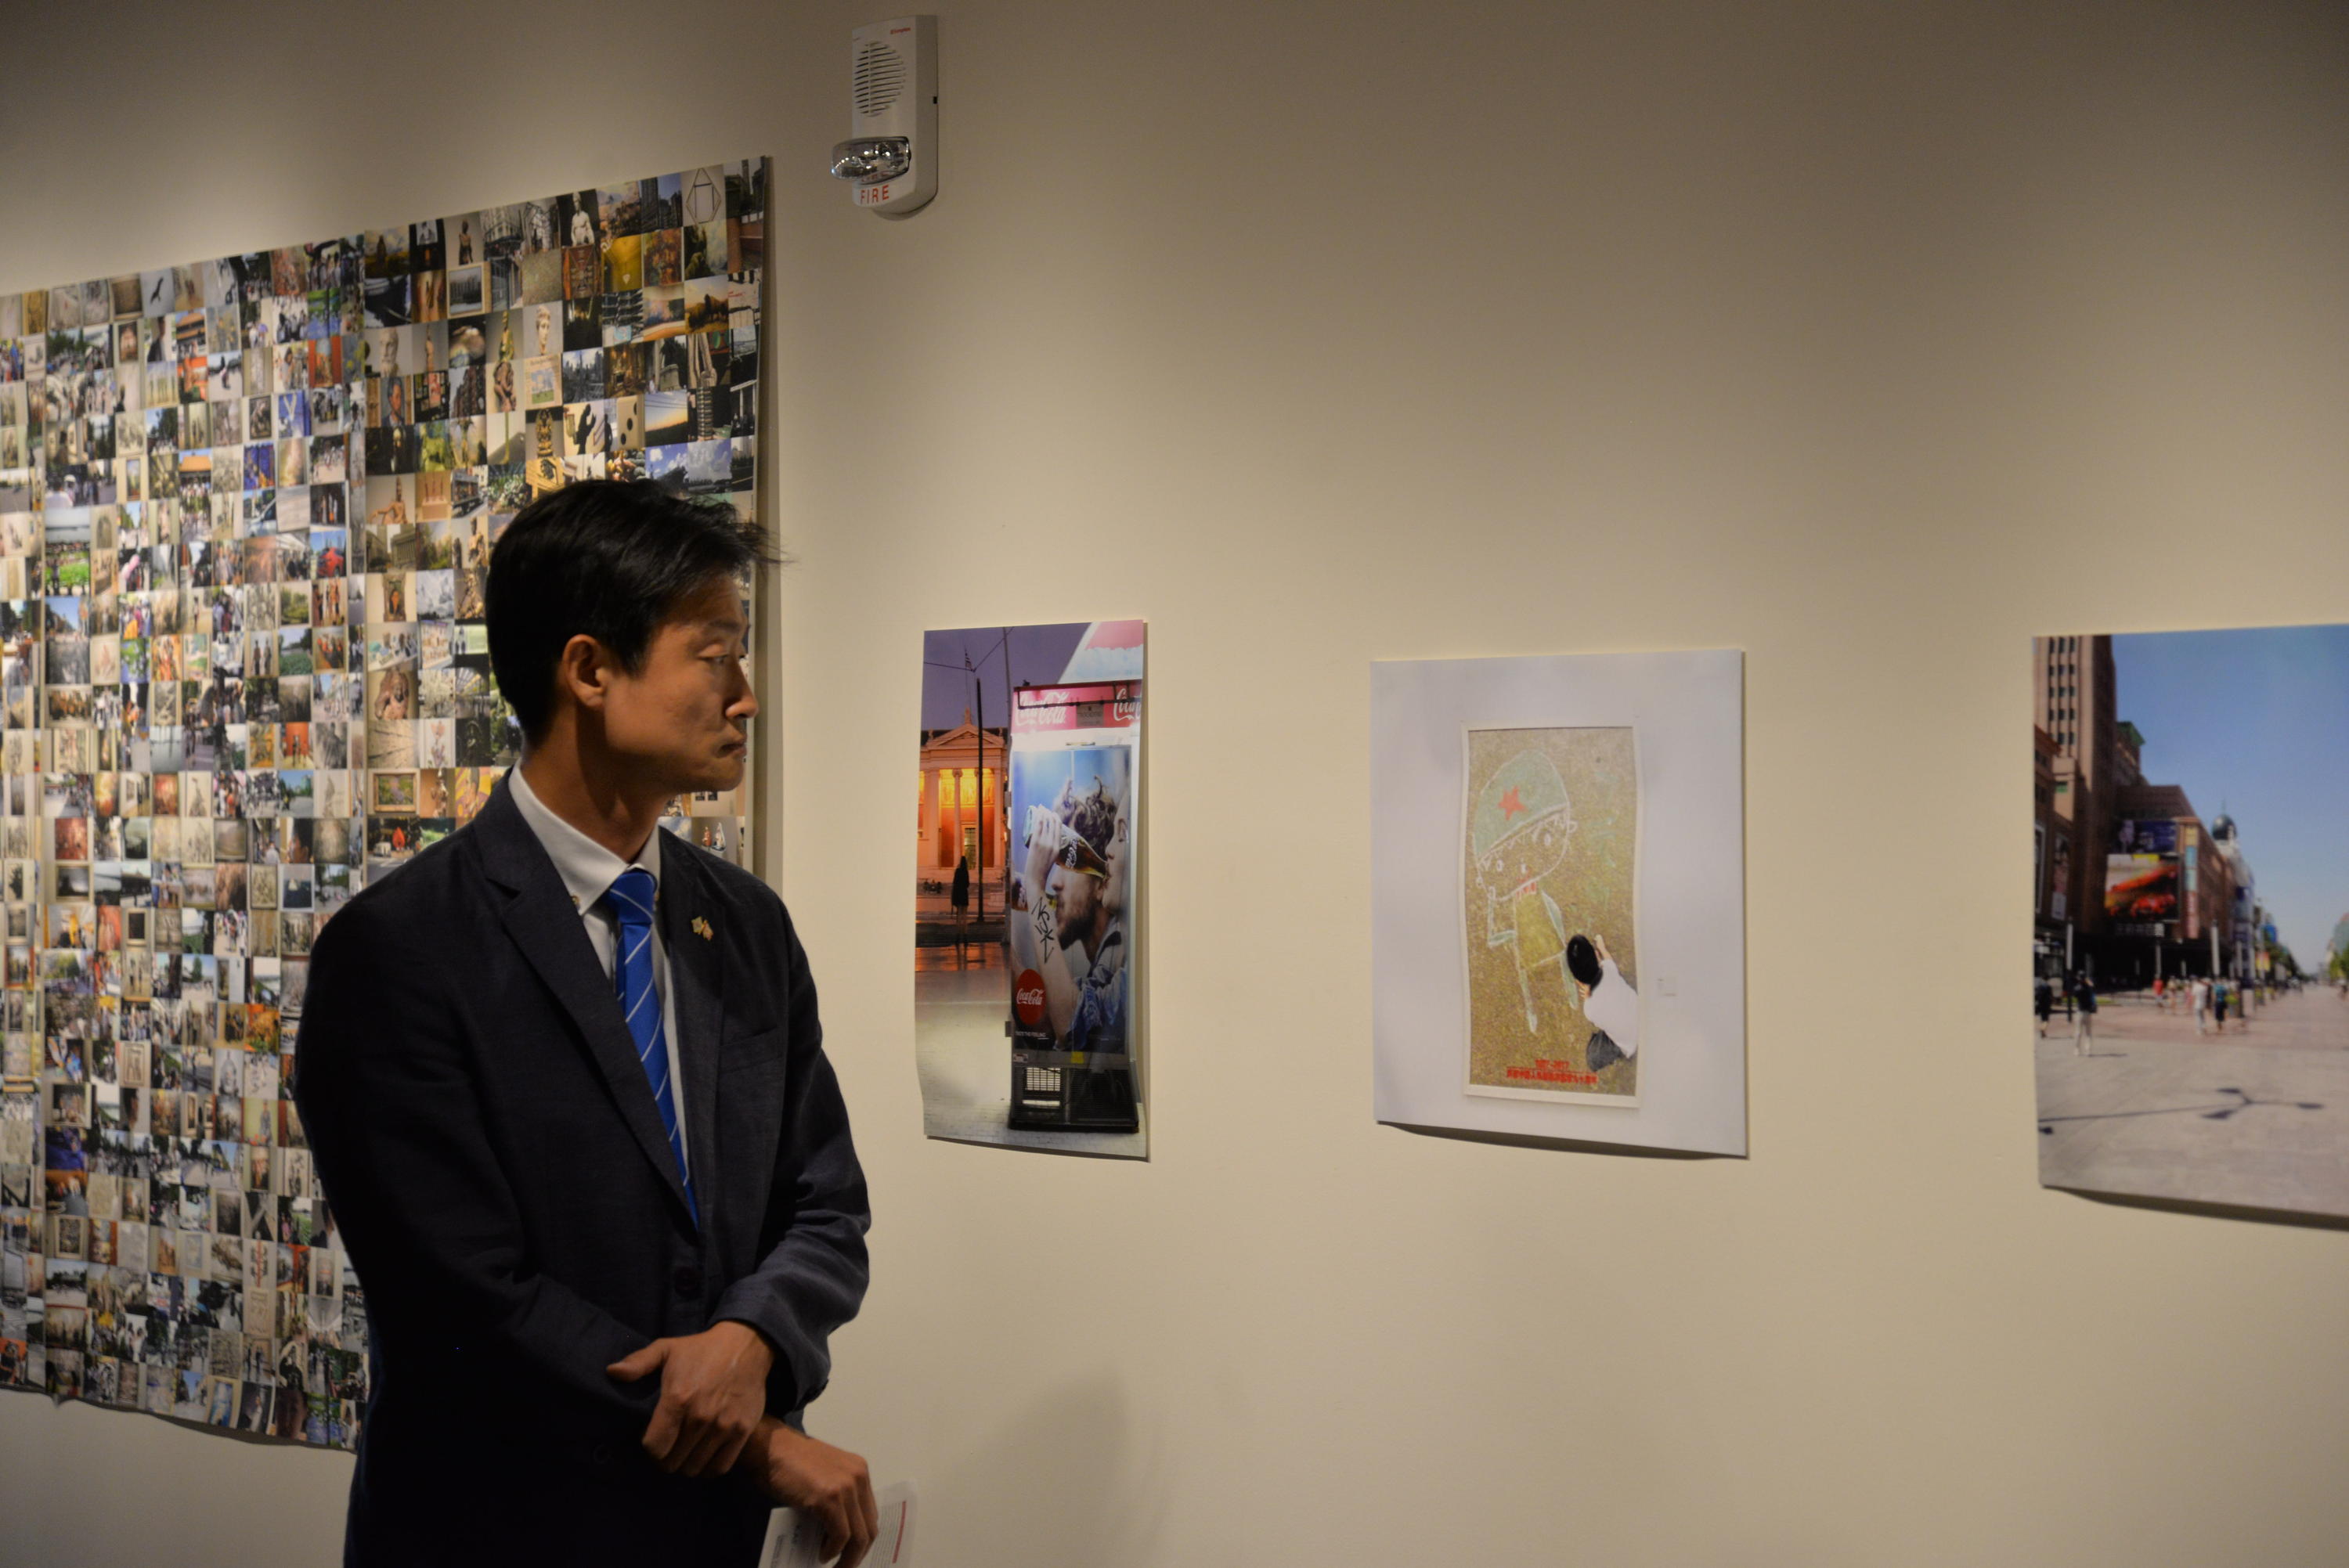 Exhibit guest looking at gallery artwork